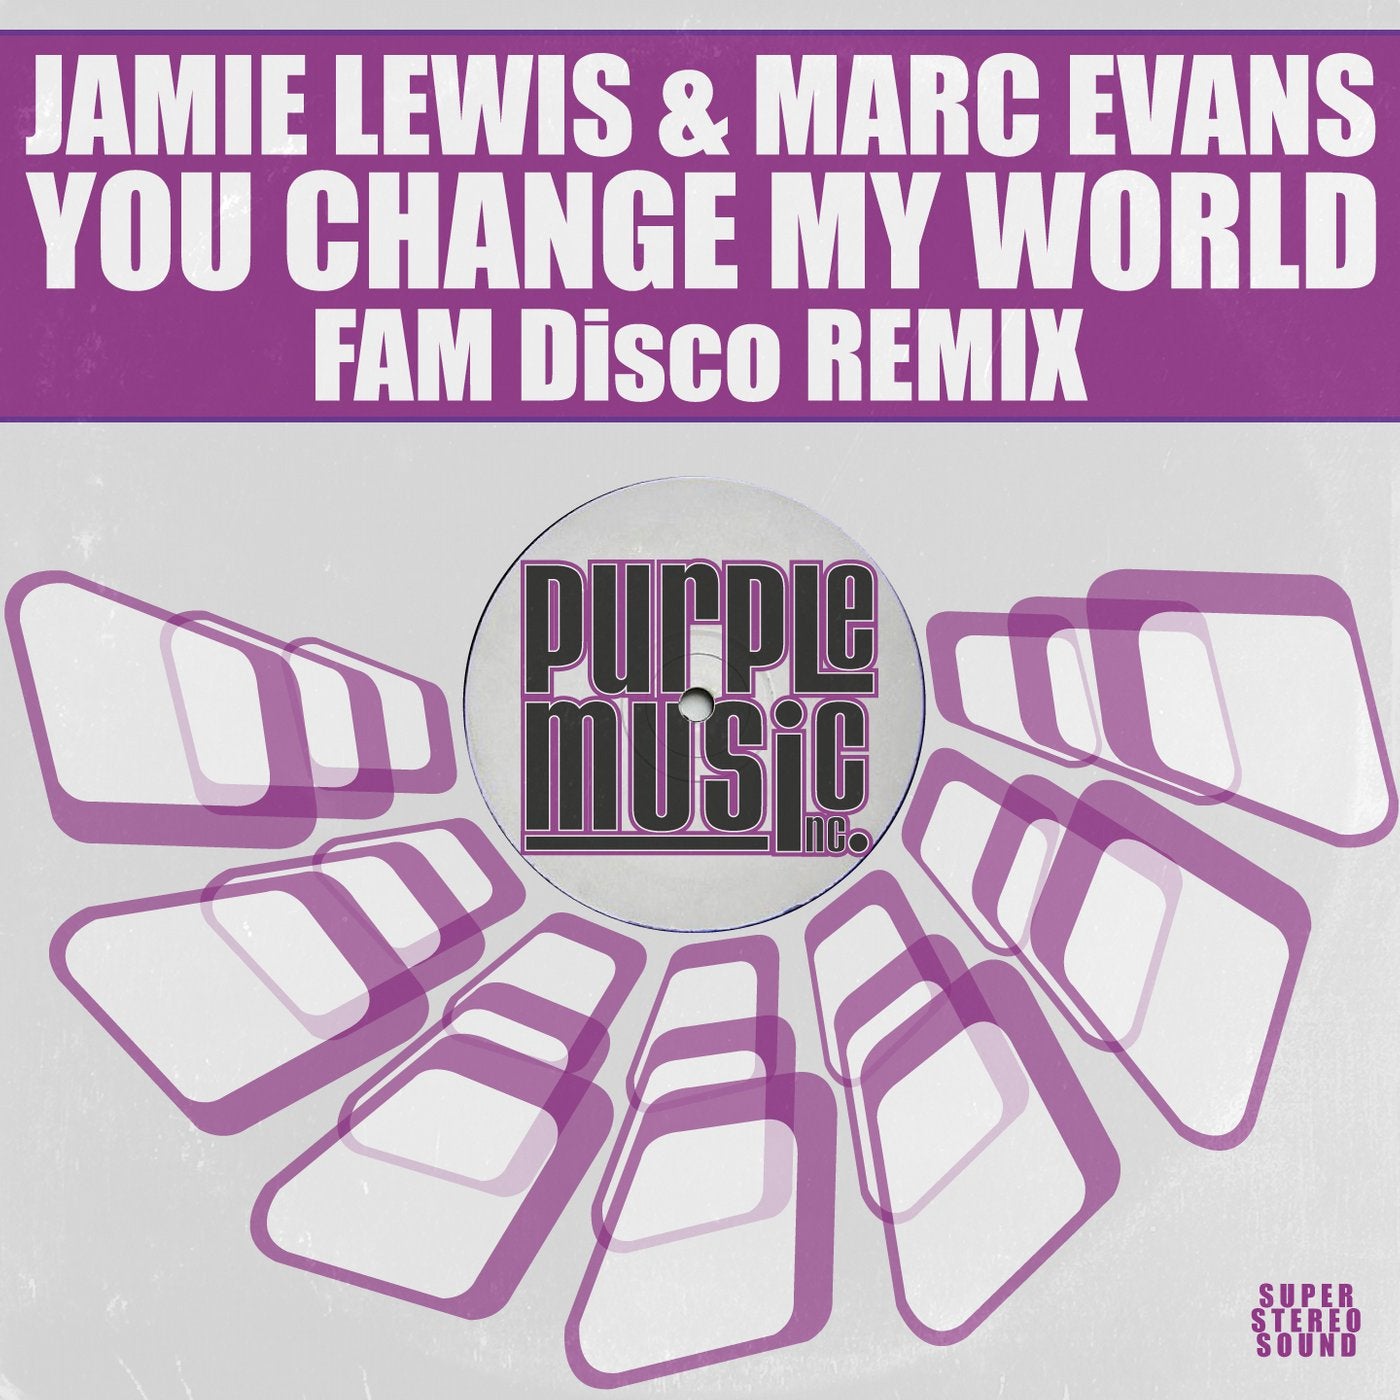 You Change My World (FAM Disco Remix)